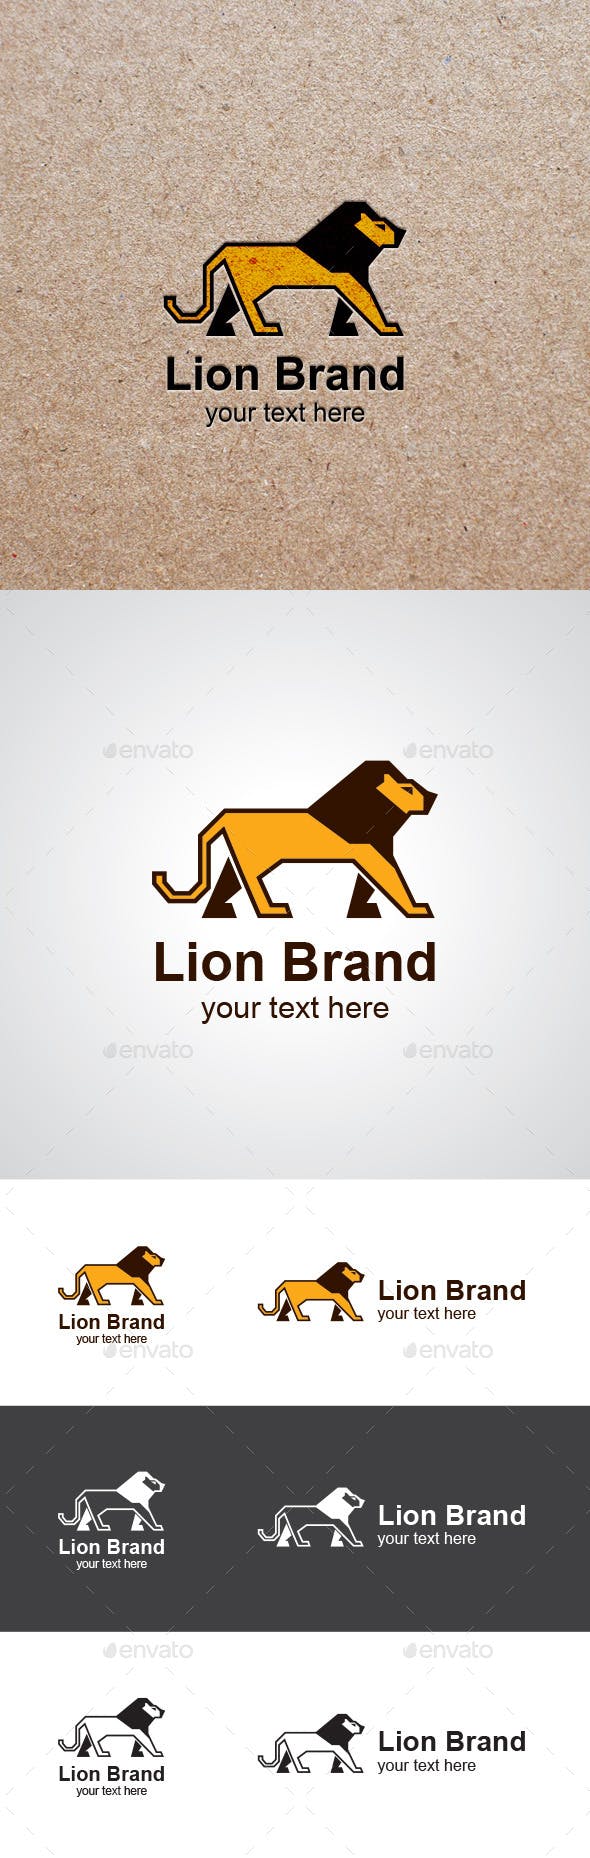 Walking Lion Logo - Walking Lion Vector Logo Design by andegro4ka | GraphicRiver